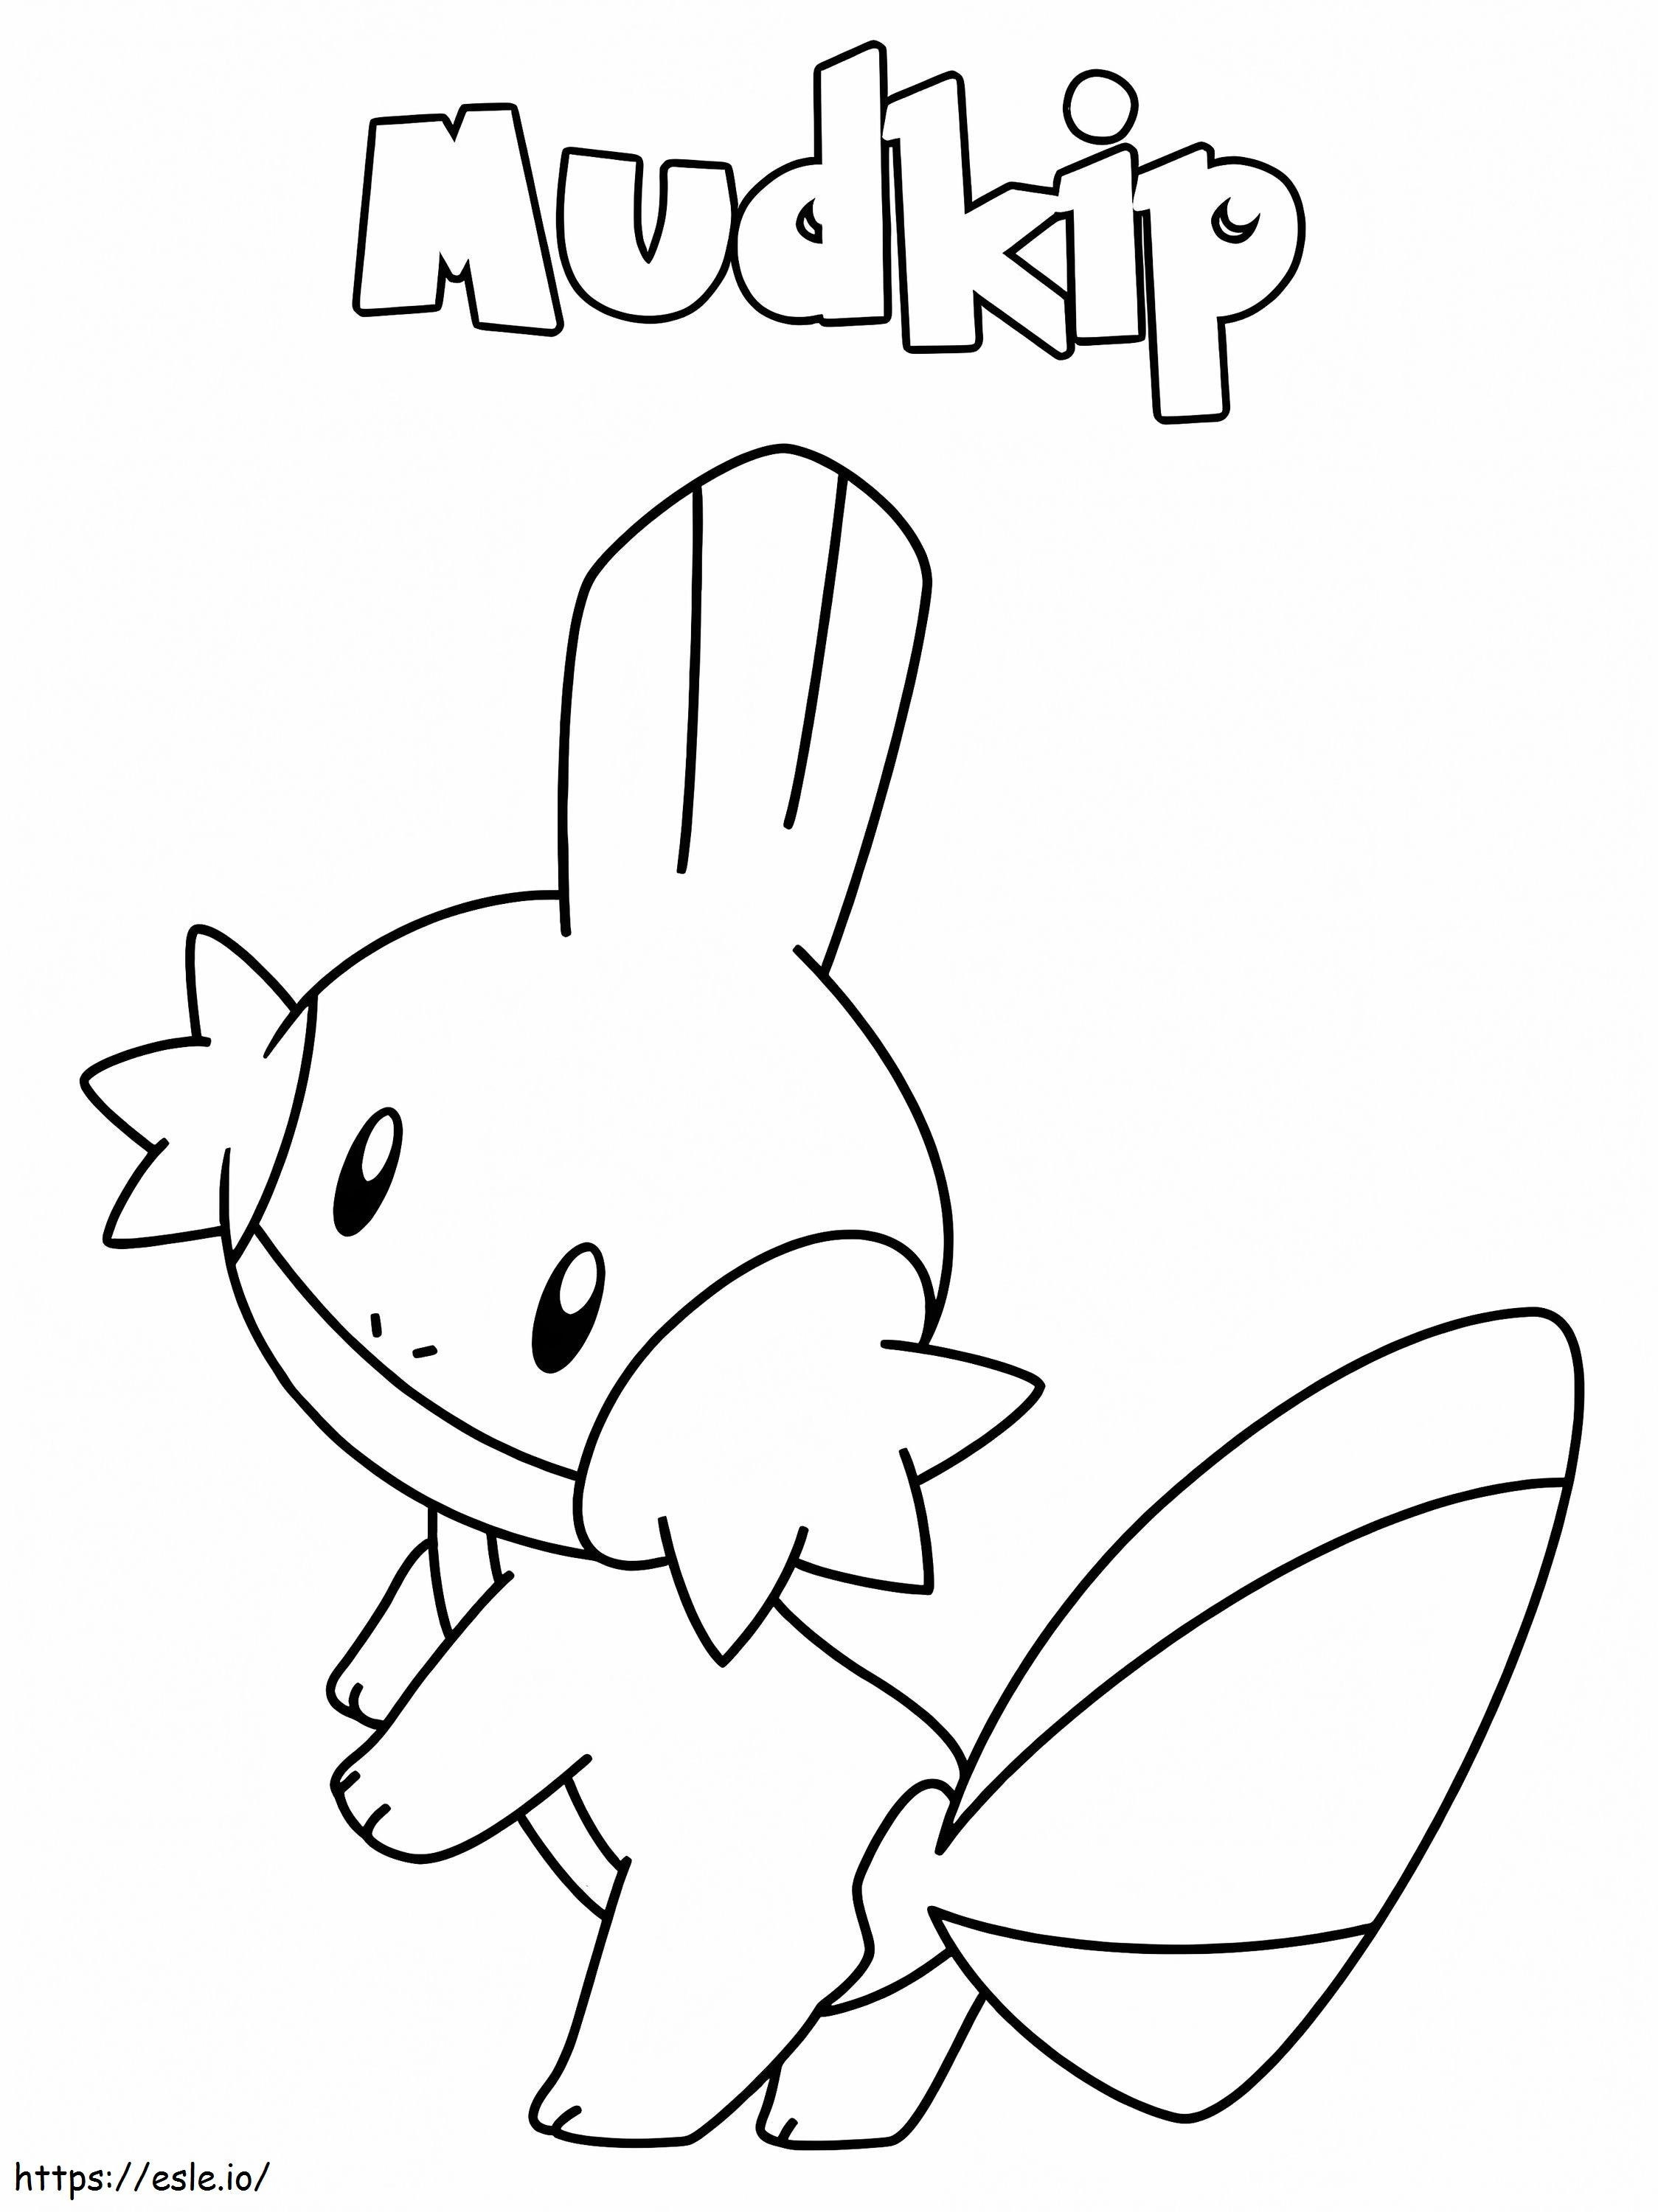 Print Mudkip Pokemon coloring page